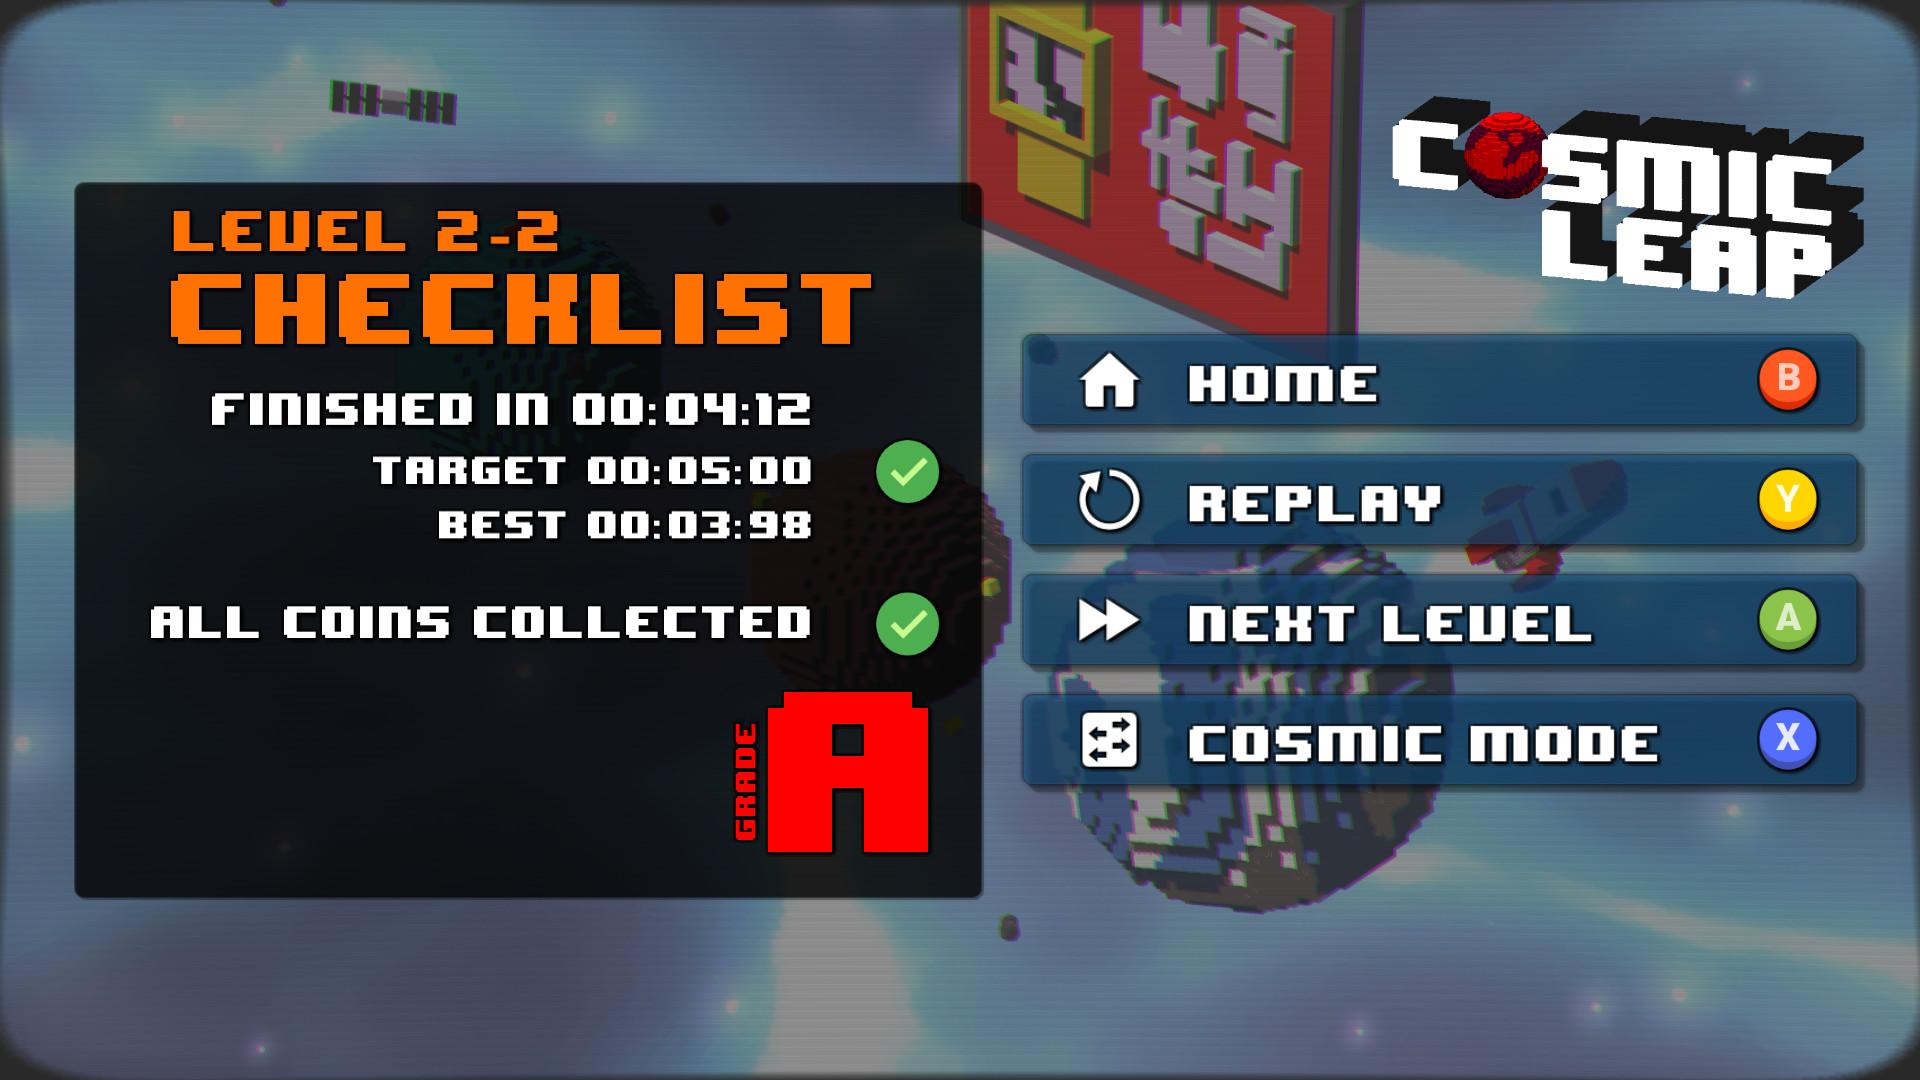 Screenshot №13 from game Cosmic Leap